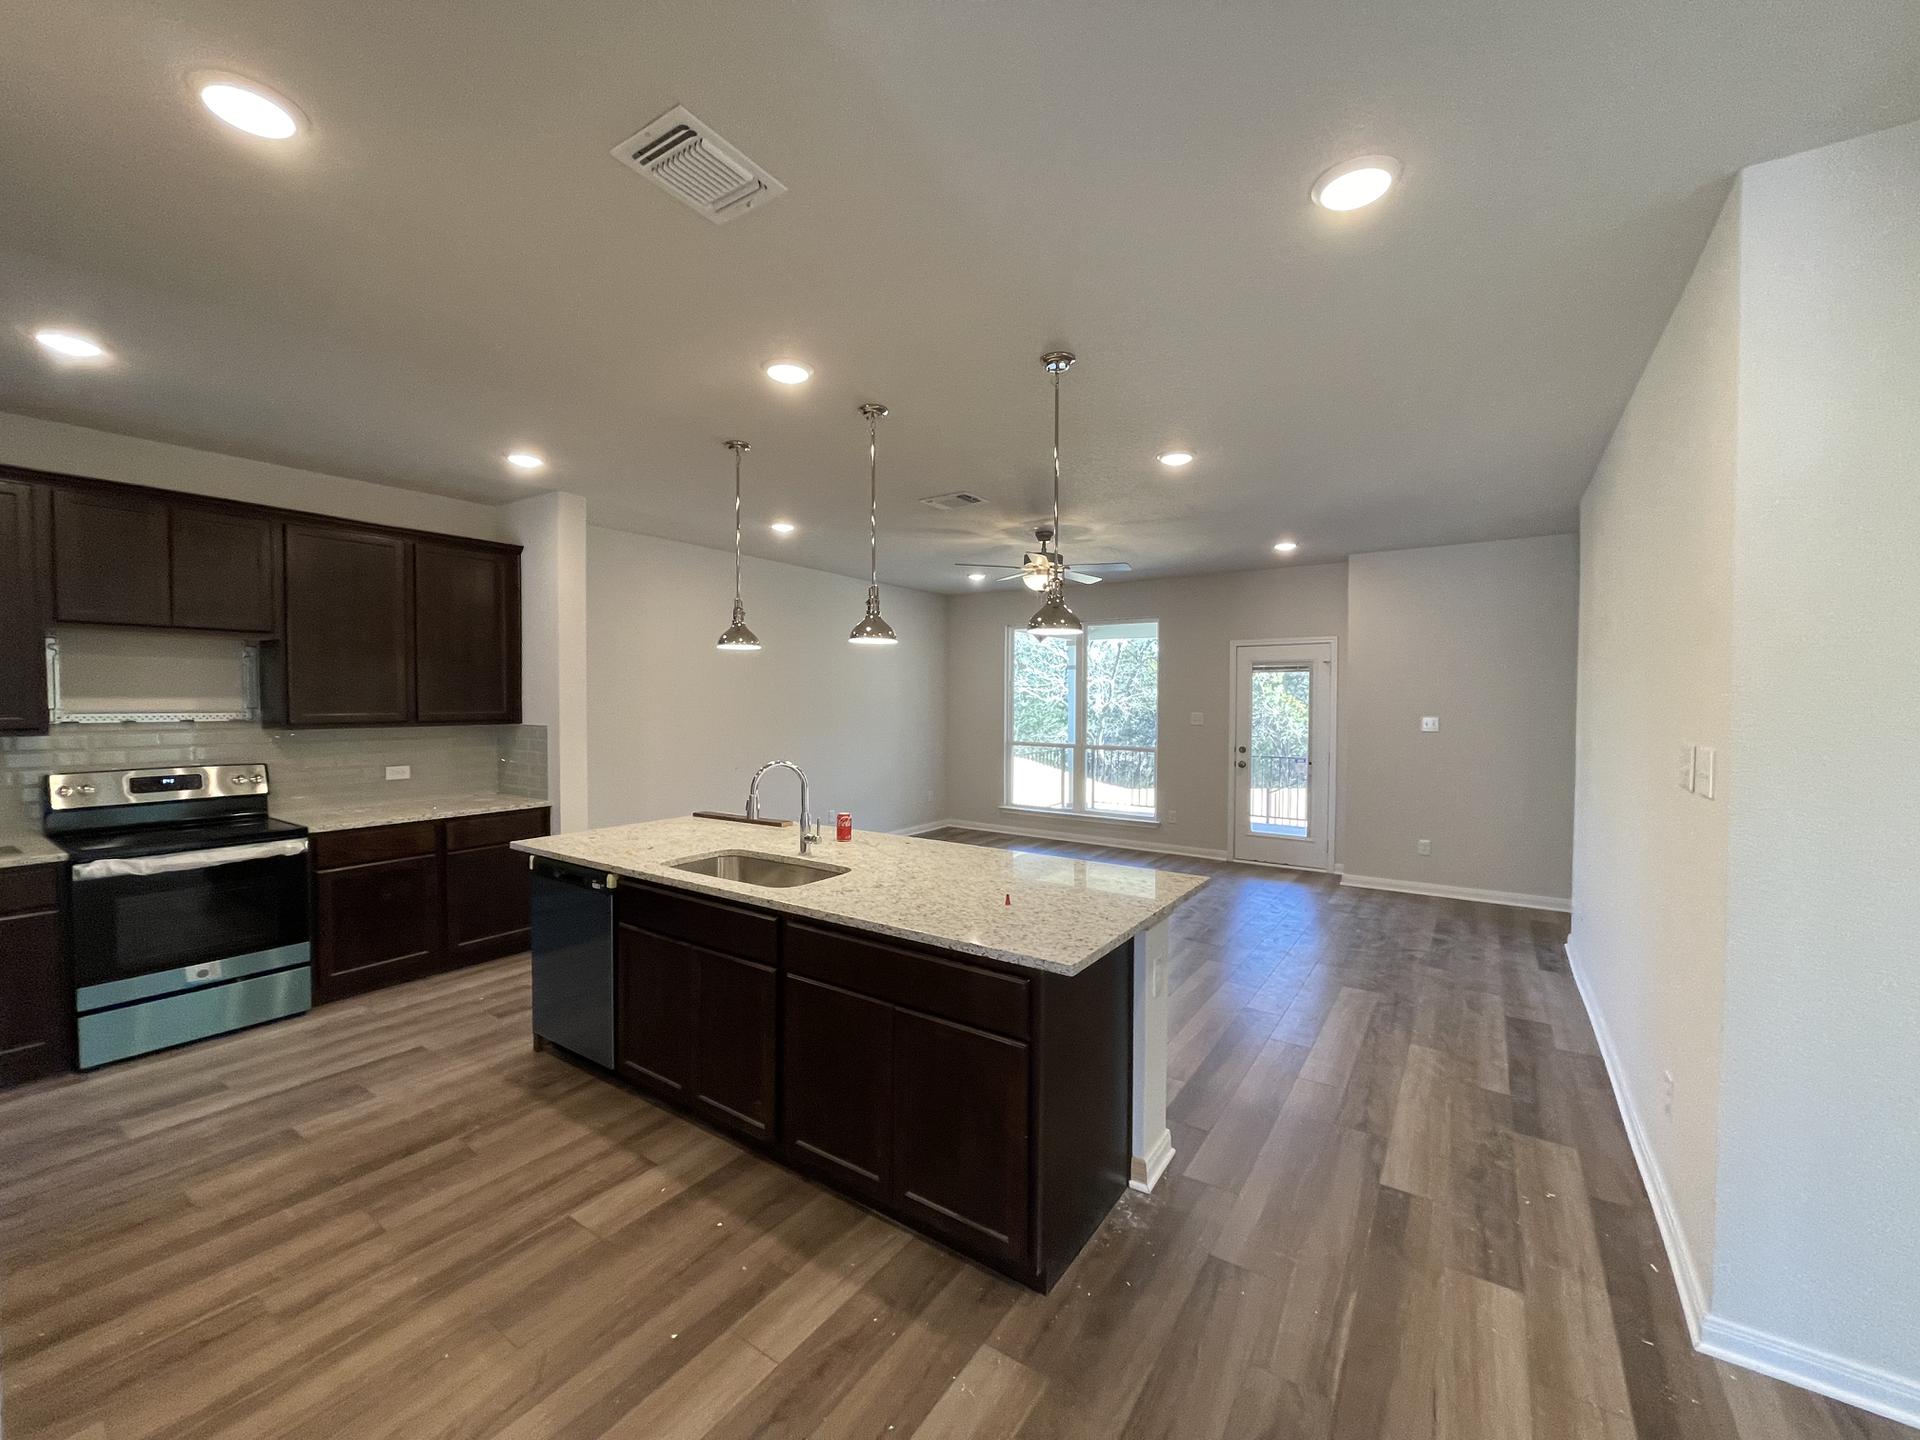 1,620sf New Home in Belton, TX